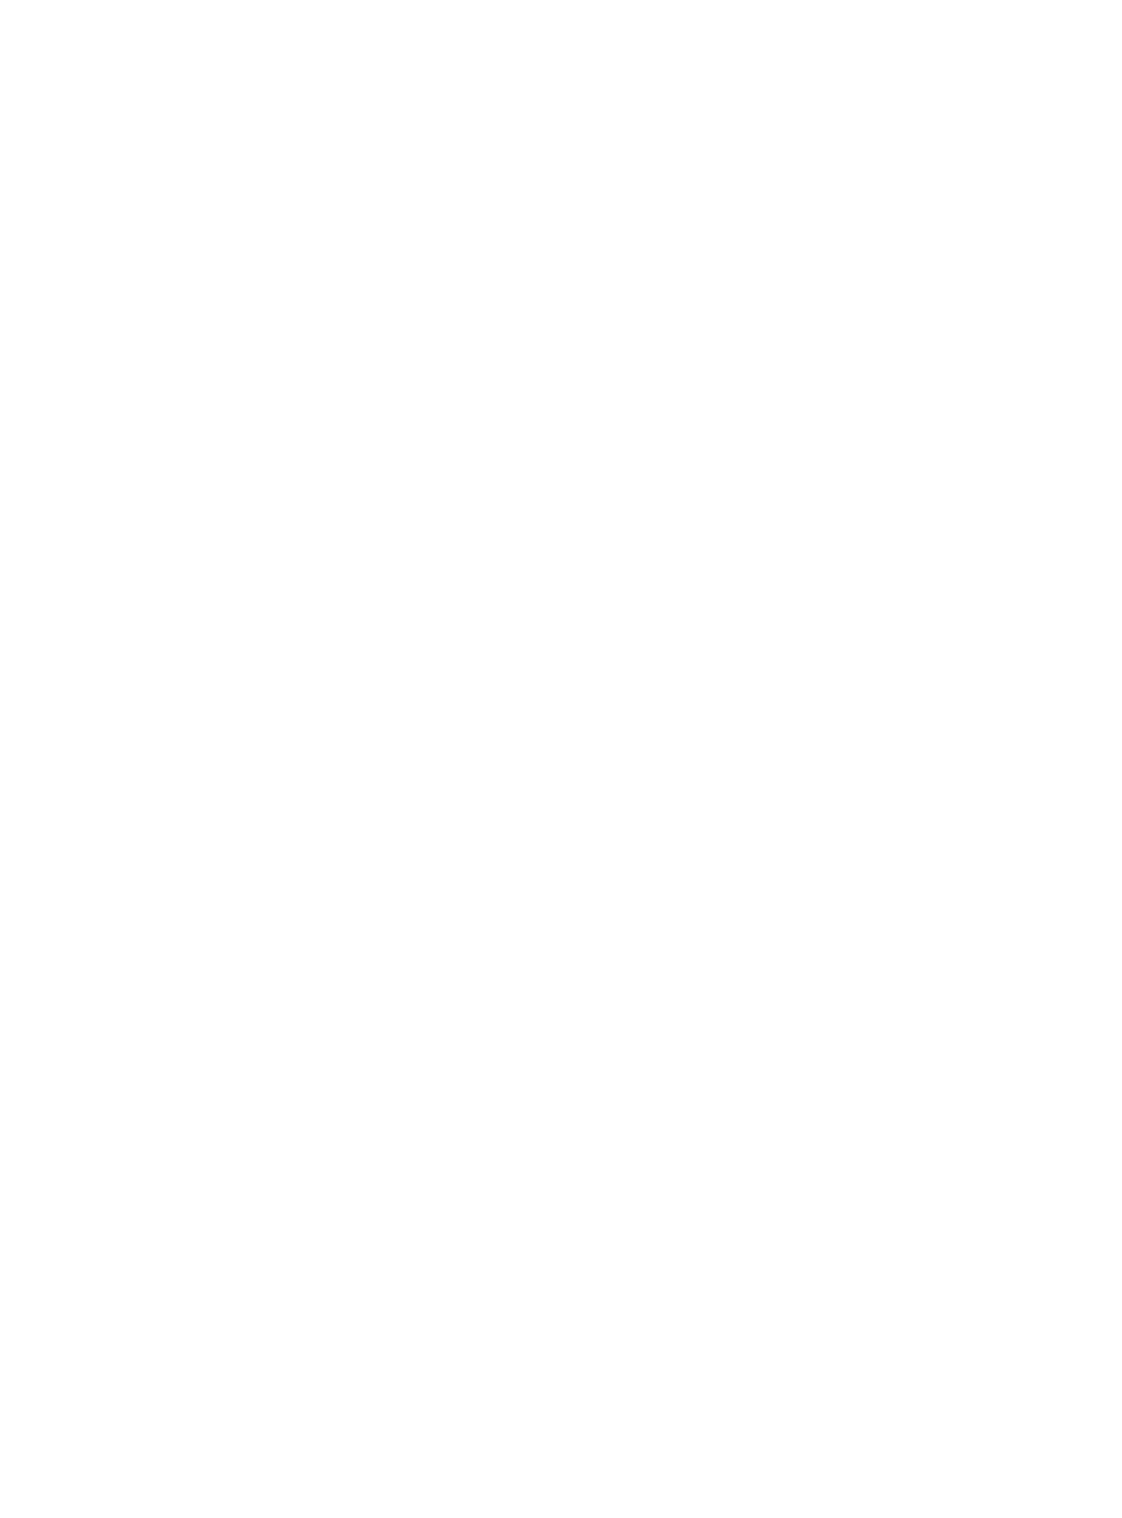 FRANK Logo